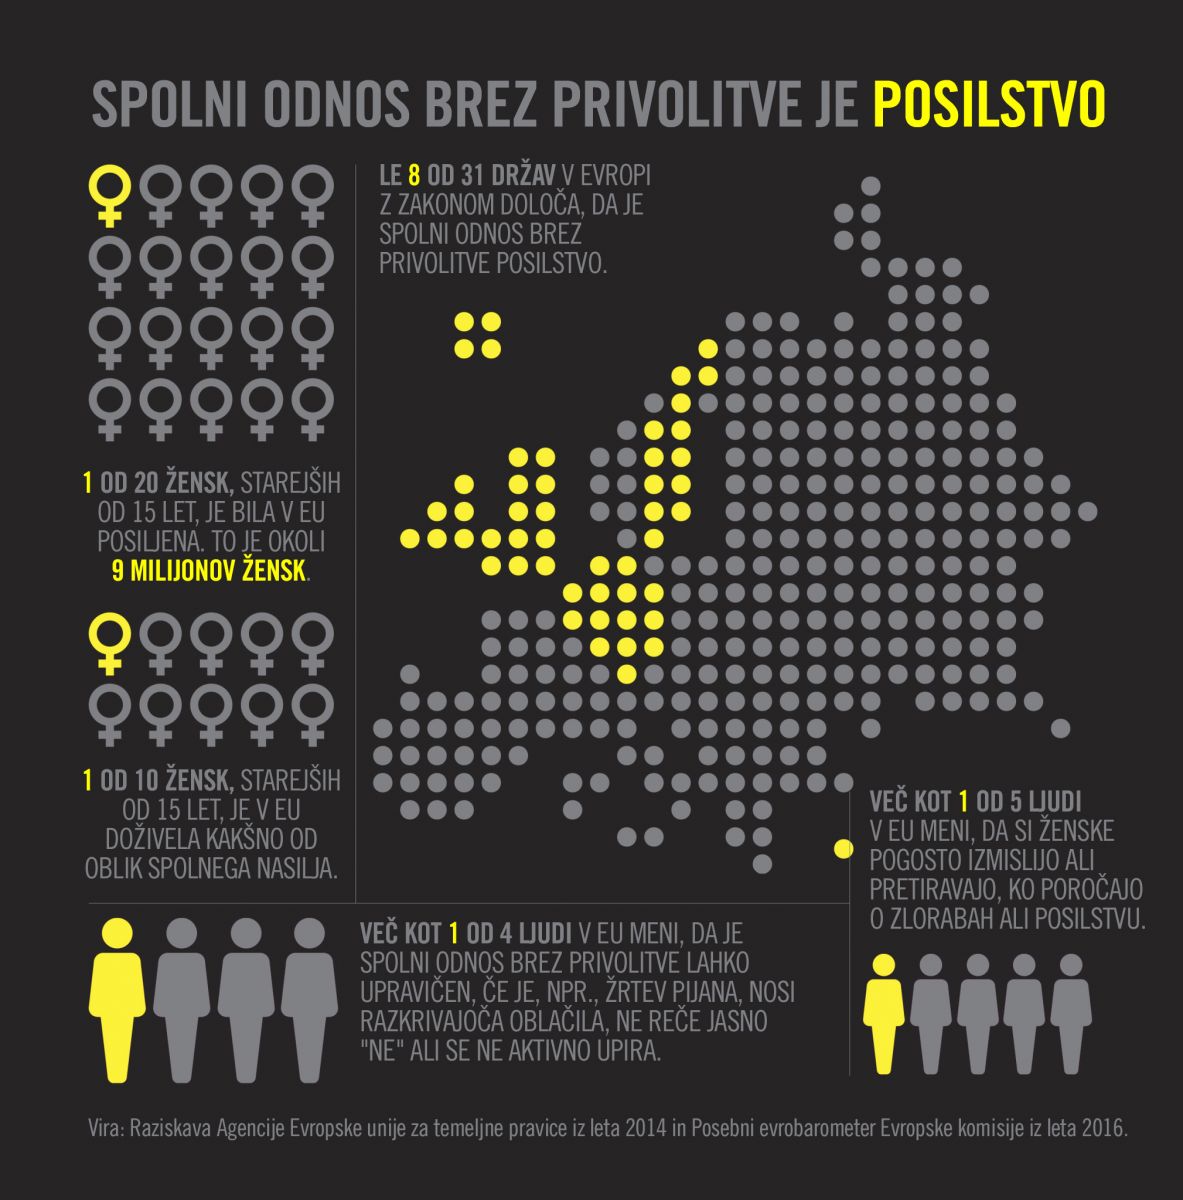 Slovenski Kazneni zakon mora redefinirati silovanje